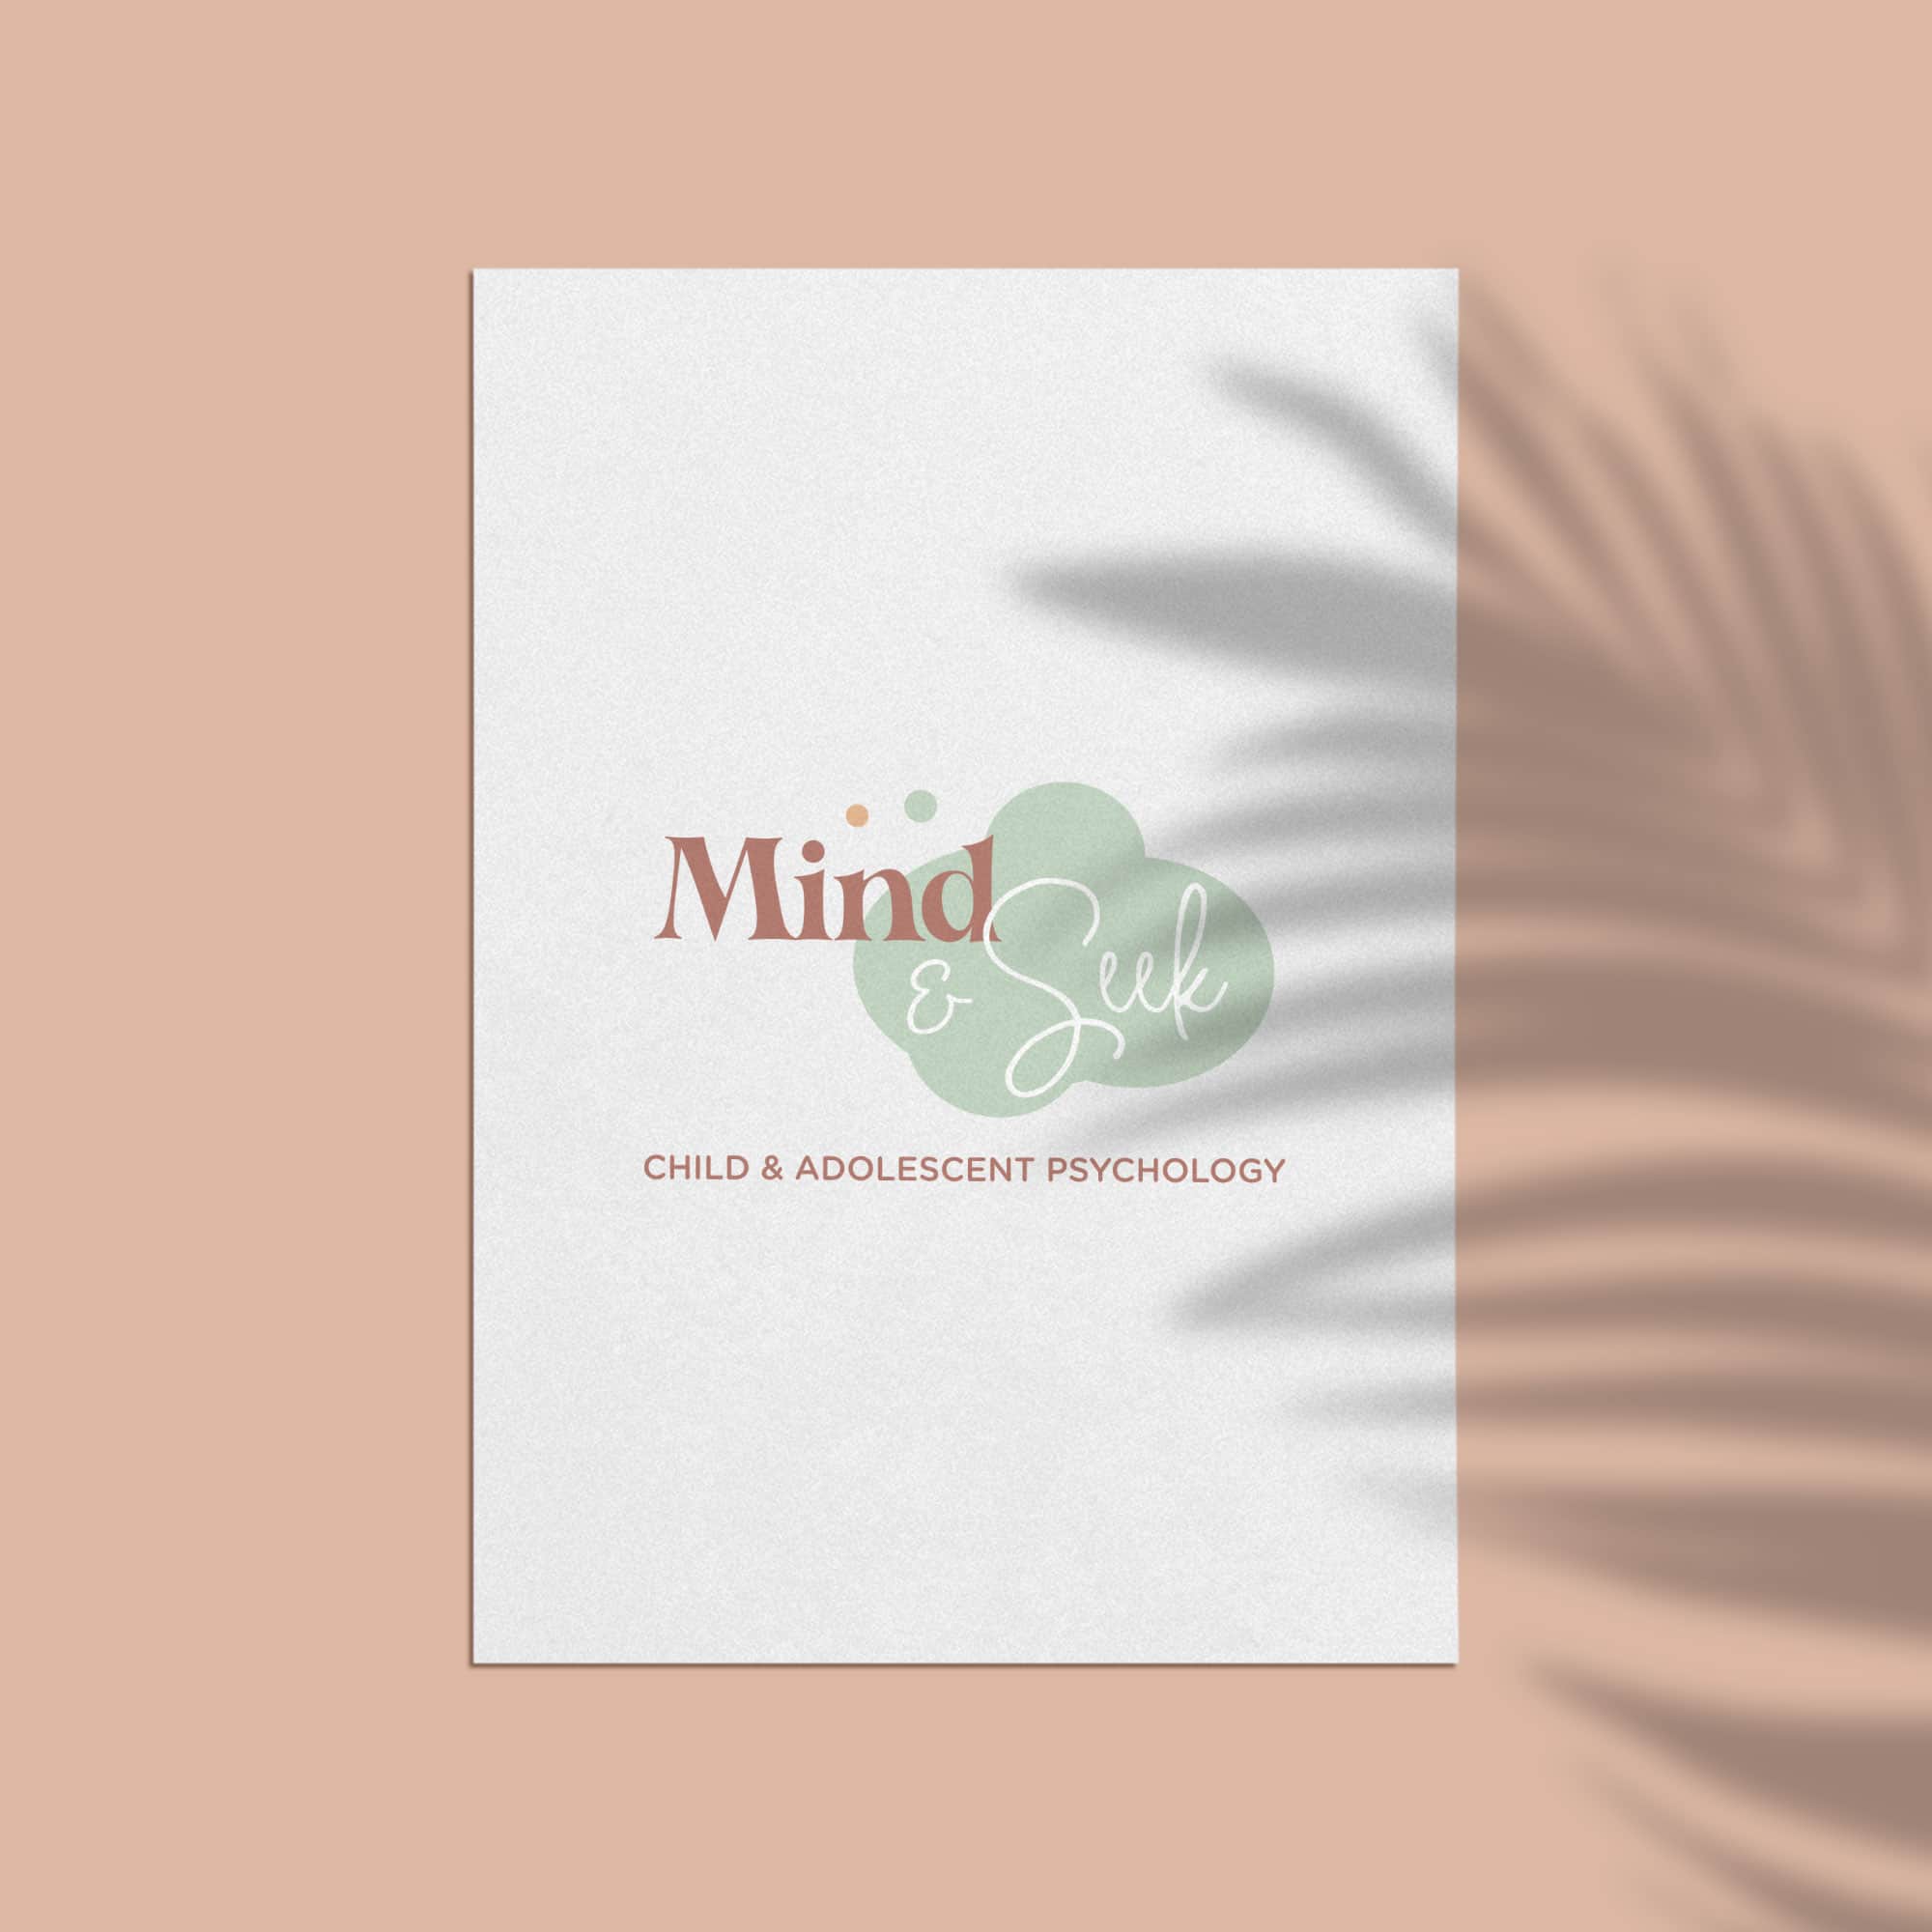 mind&seek promo1